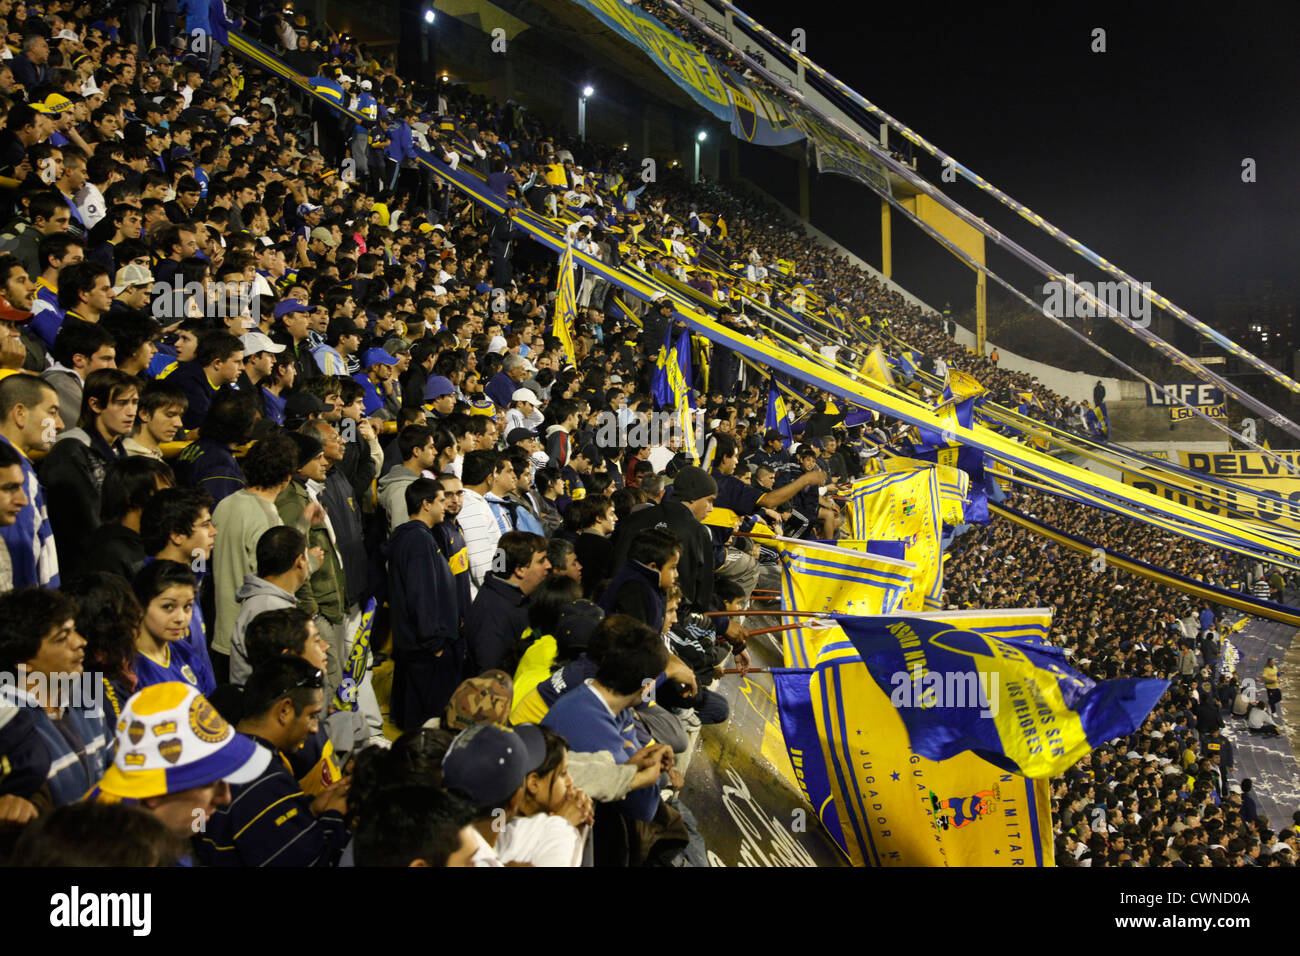 Football match of Boca Juniors at the Bombonera stadium, La Boca, Buenos Aires, Argentina. Stock Photo